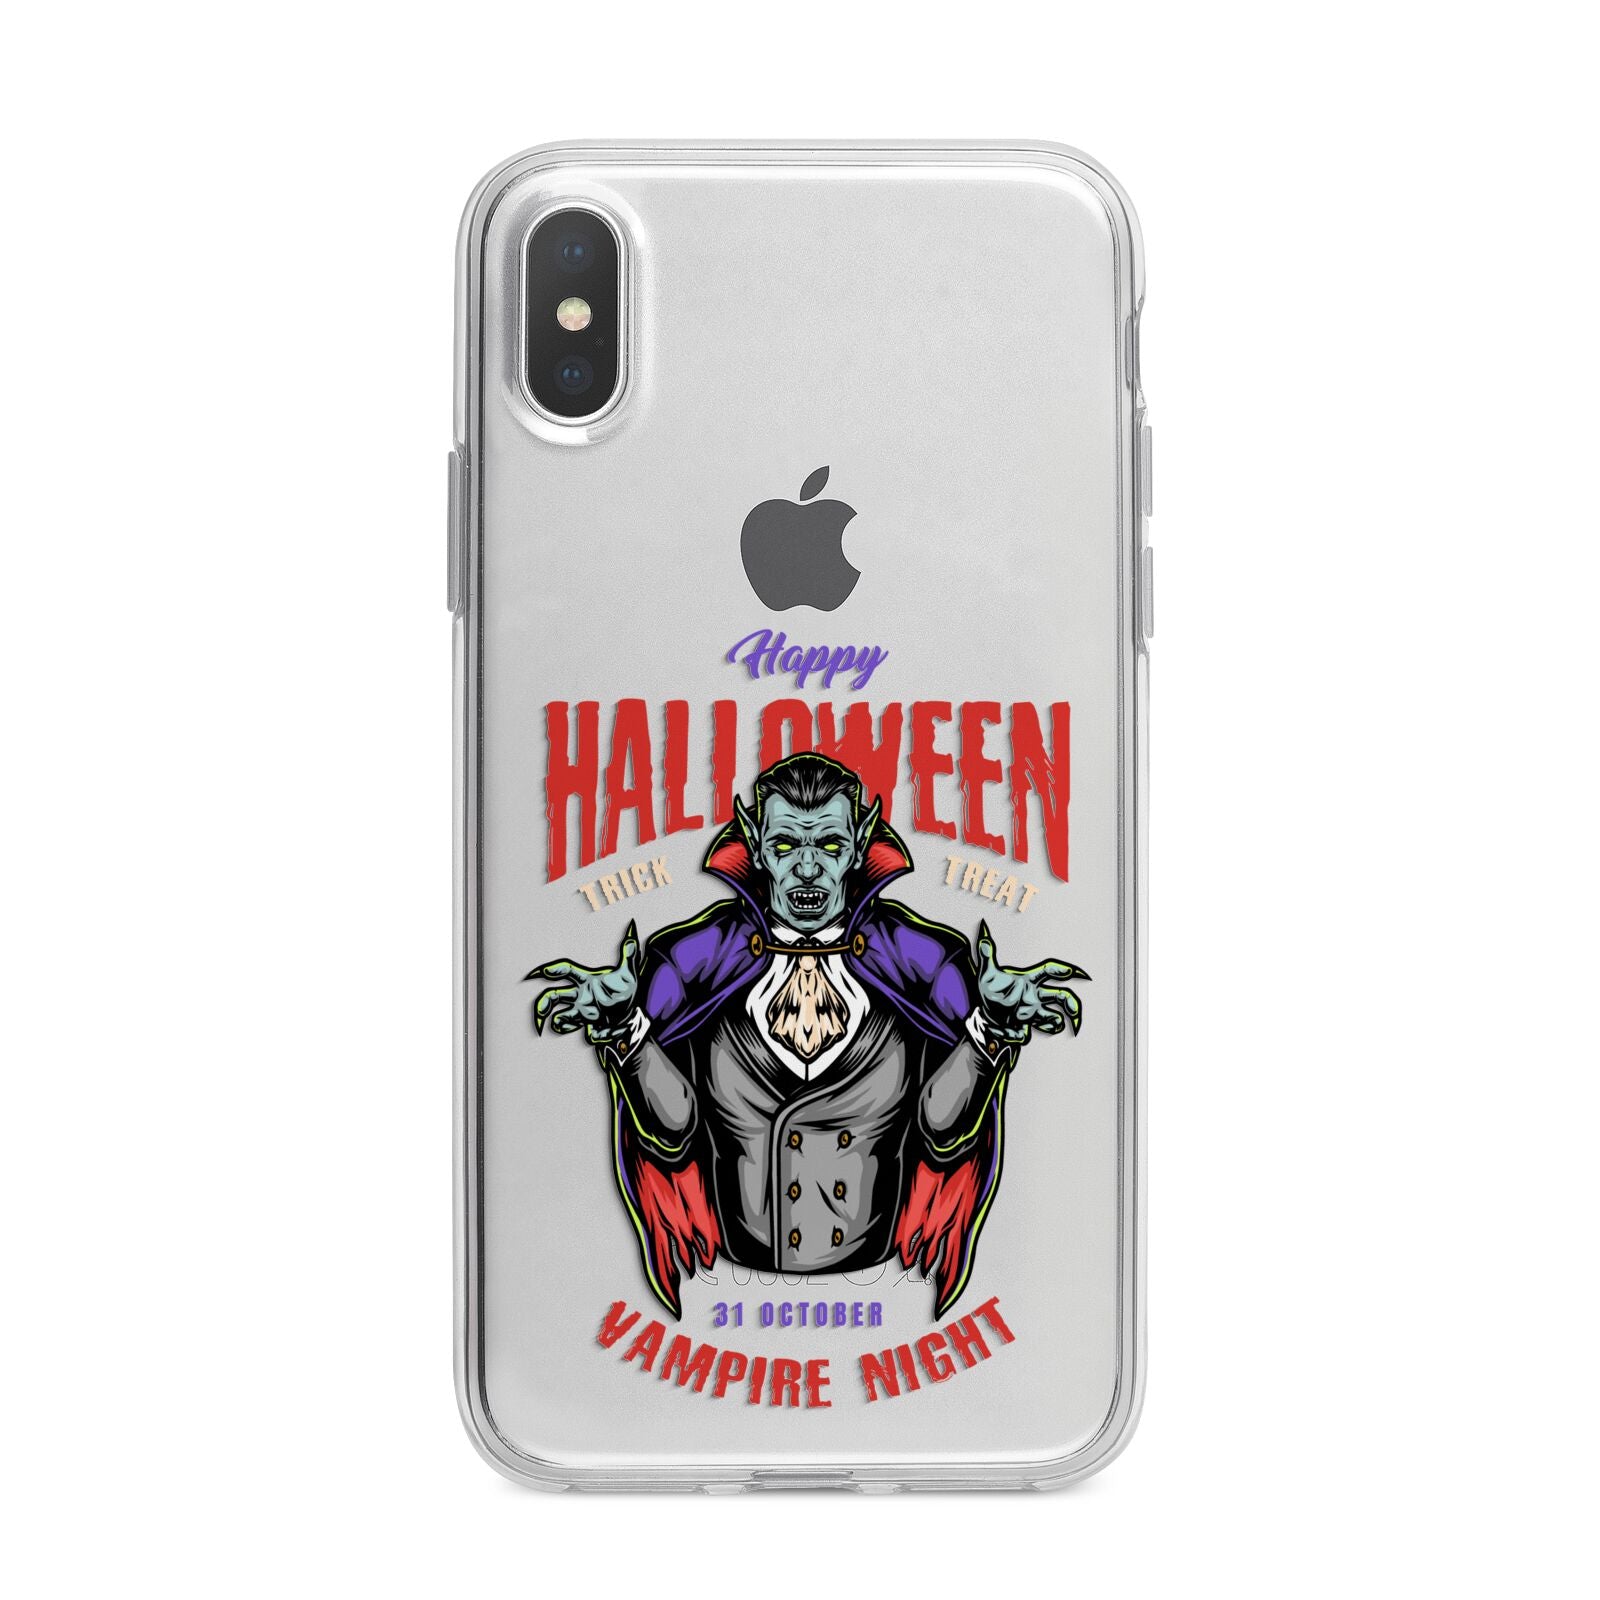 Vampire Night iPhone X Bumper Case on Silver iPhone Alternative Image 1